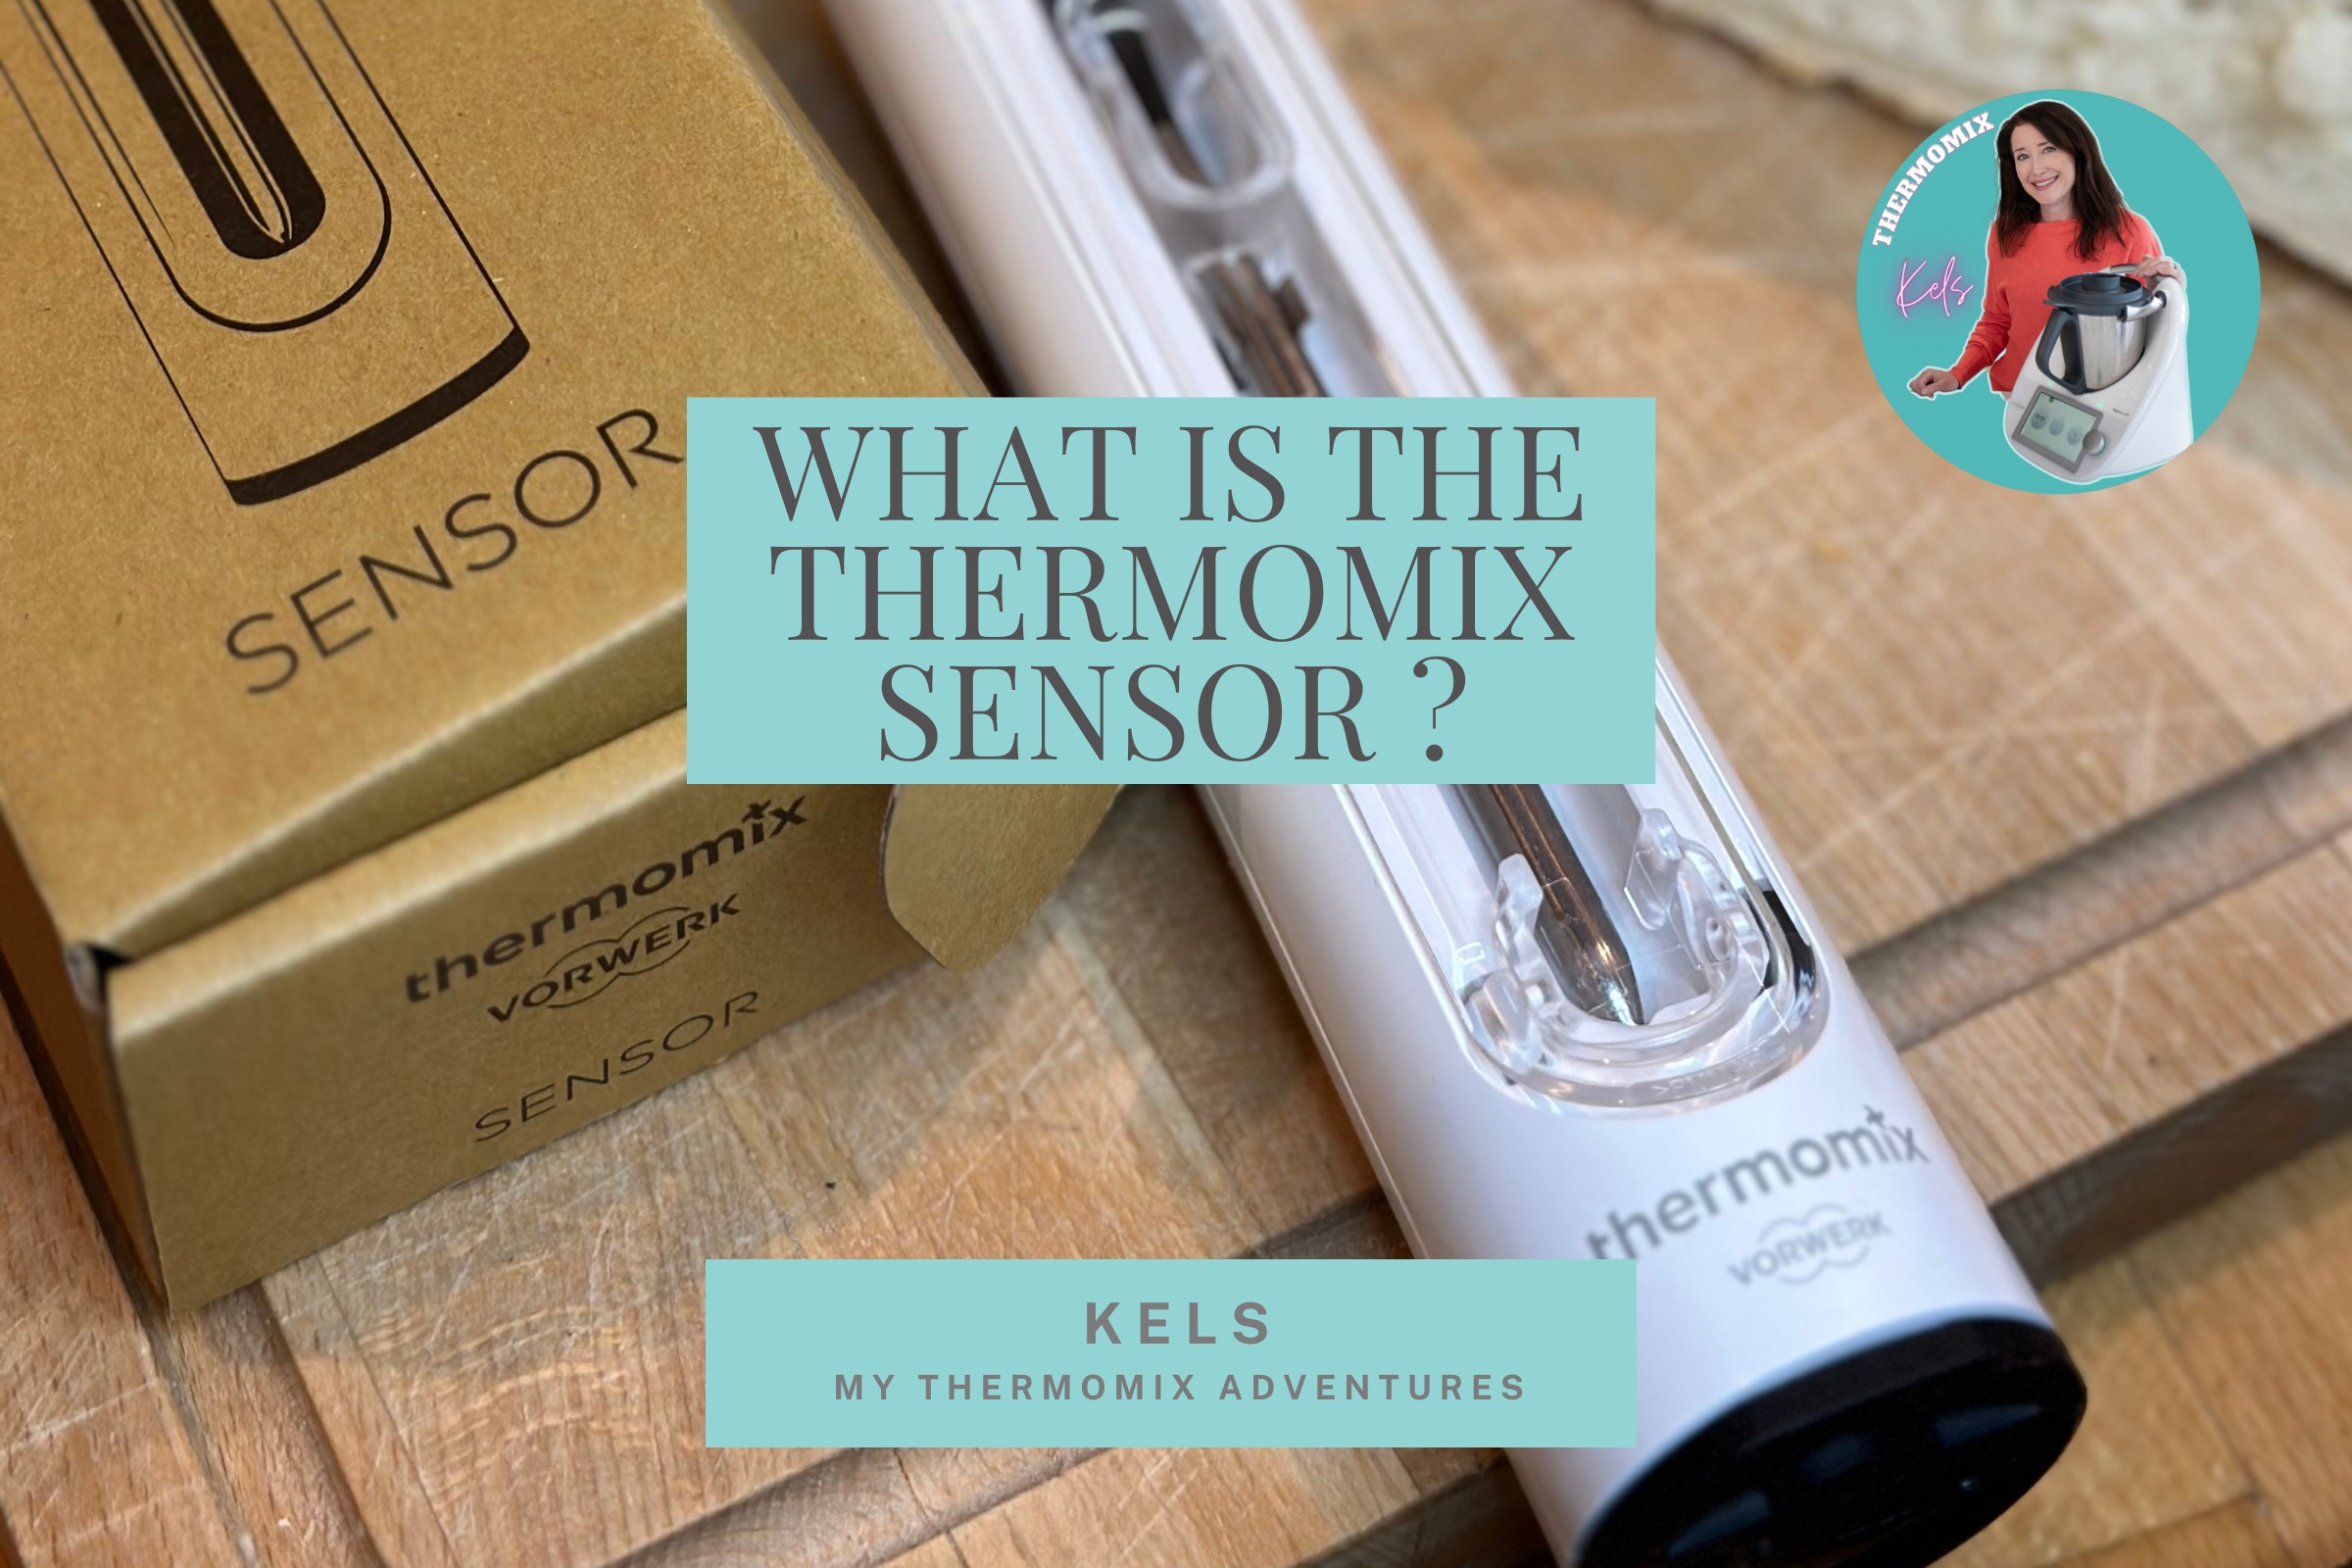 Thermomix sensor